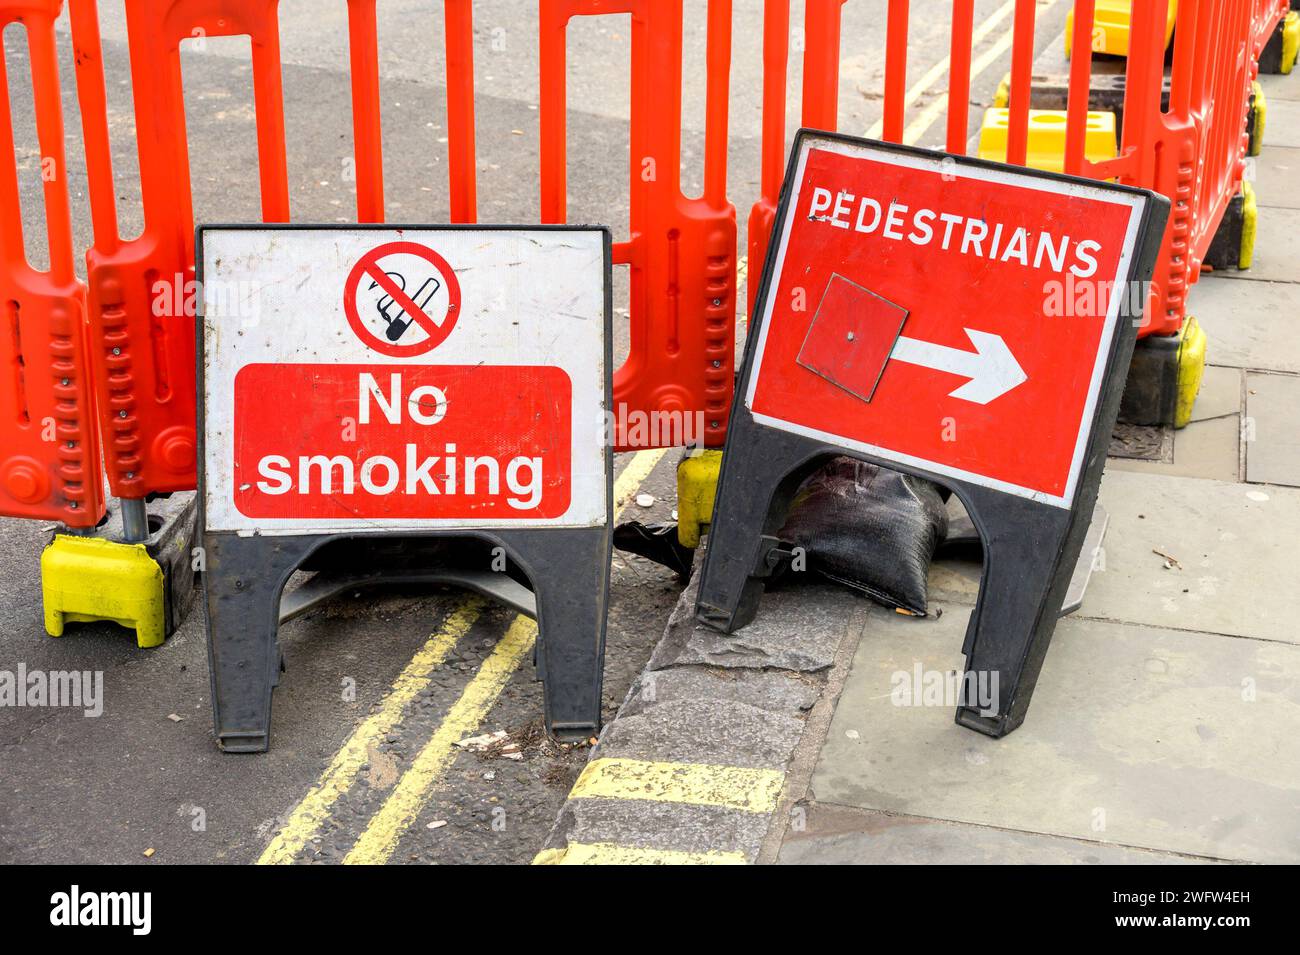 London, UK. No Smoking Pedestrians signs Stock Photo